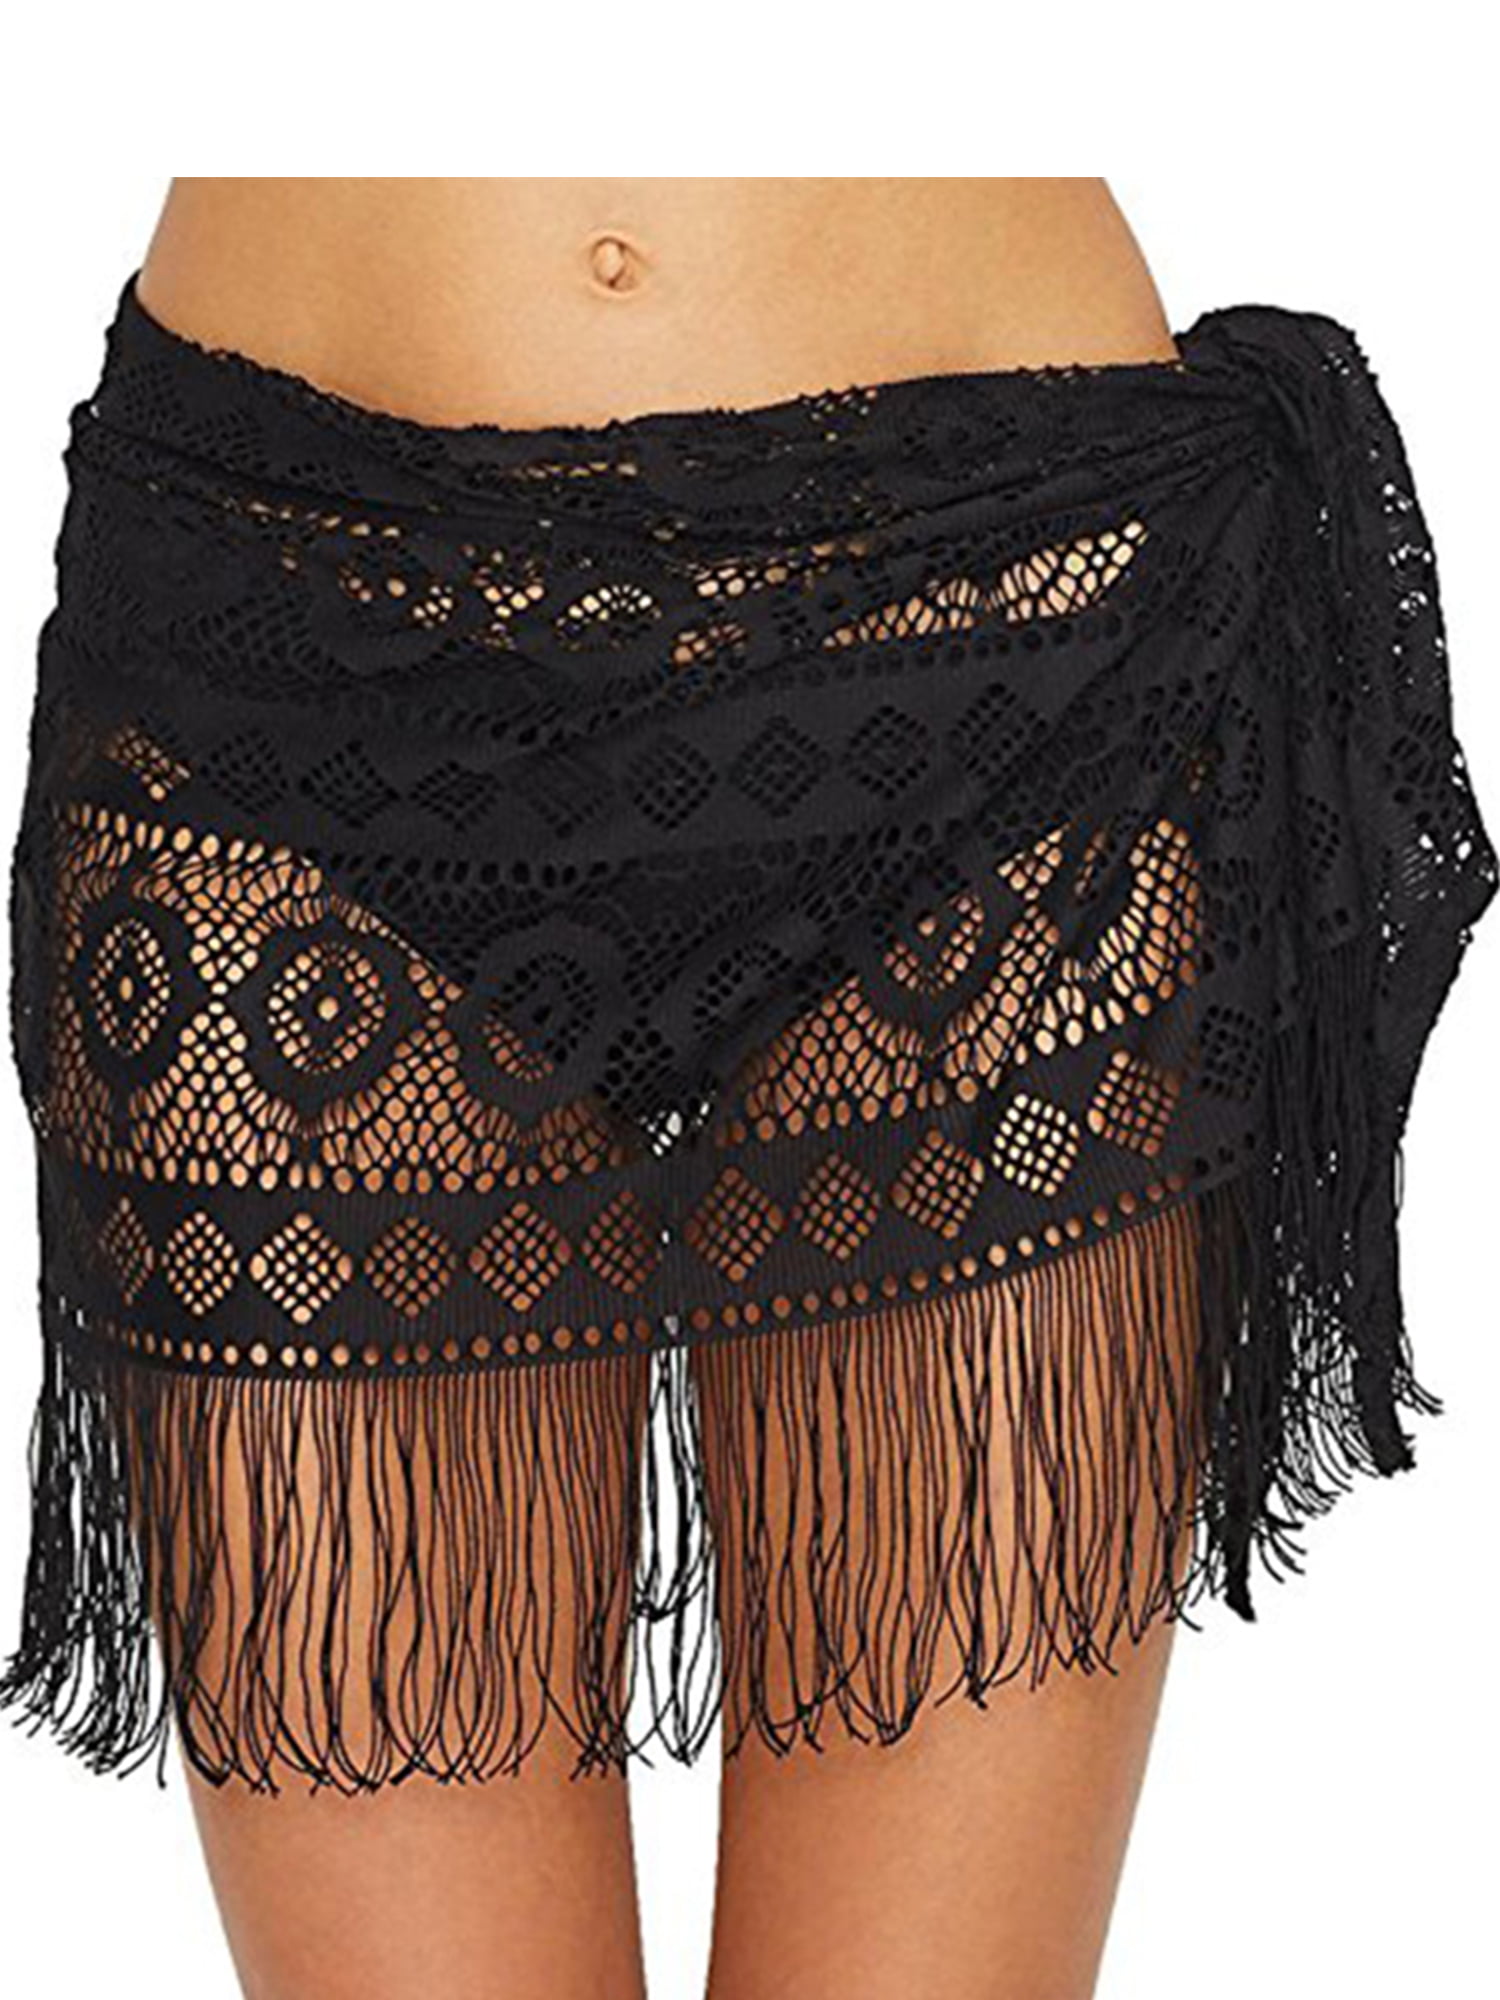 Sexy Dance Womens Beach Short Sarong Sheer Lace Crochet Cover Up Tassels Swimwear Wrap Summer